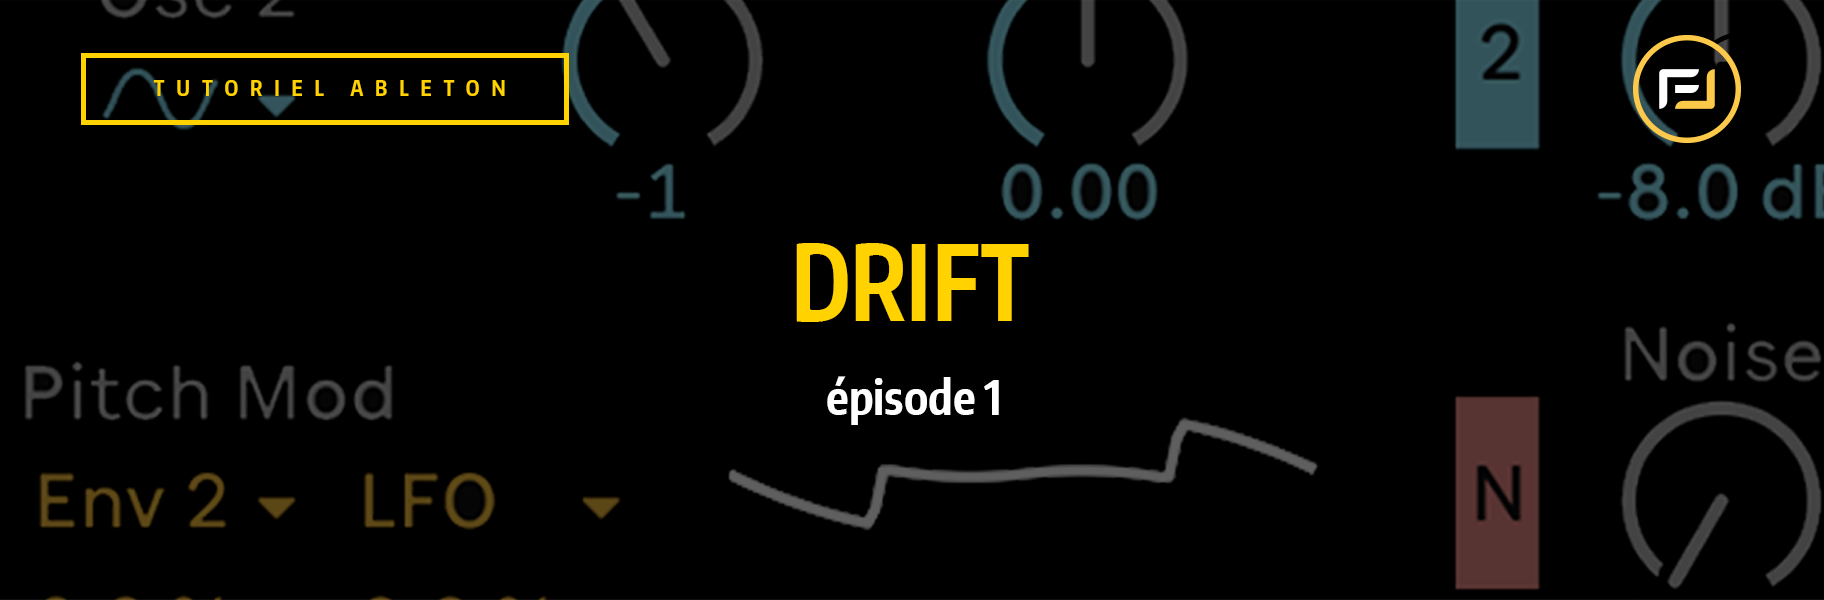 Tutoriel Ableton Live - Drift episode 1